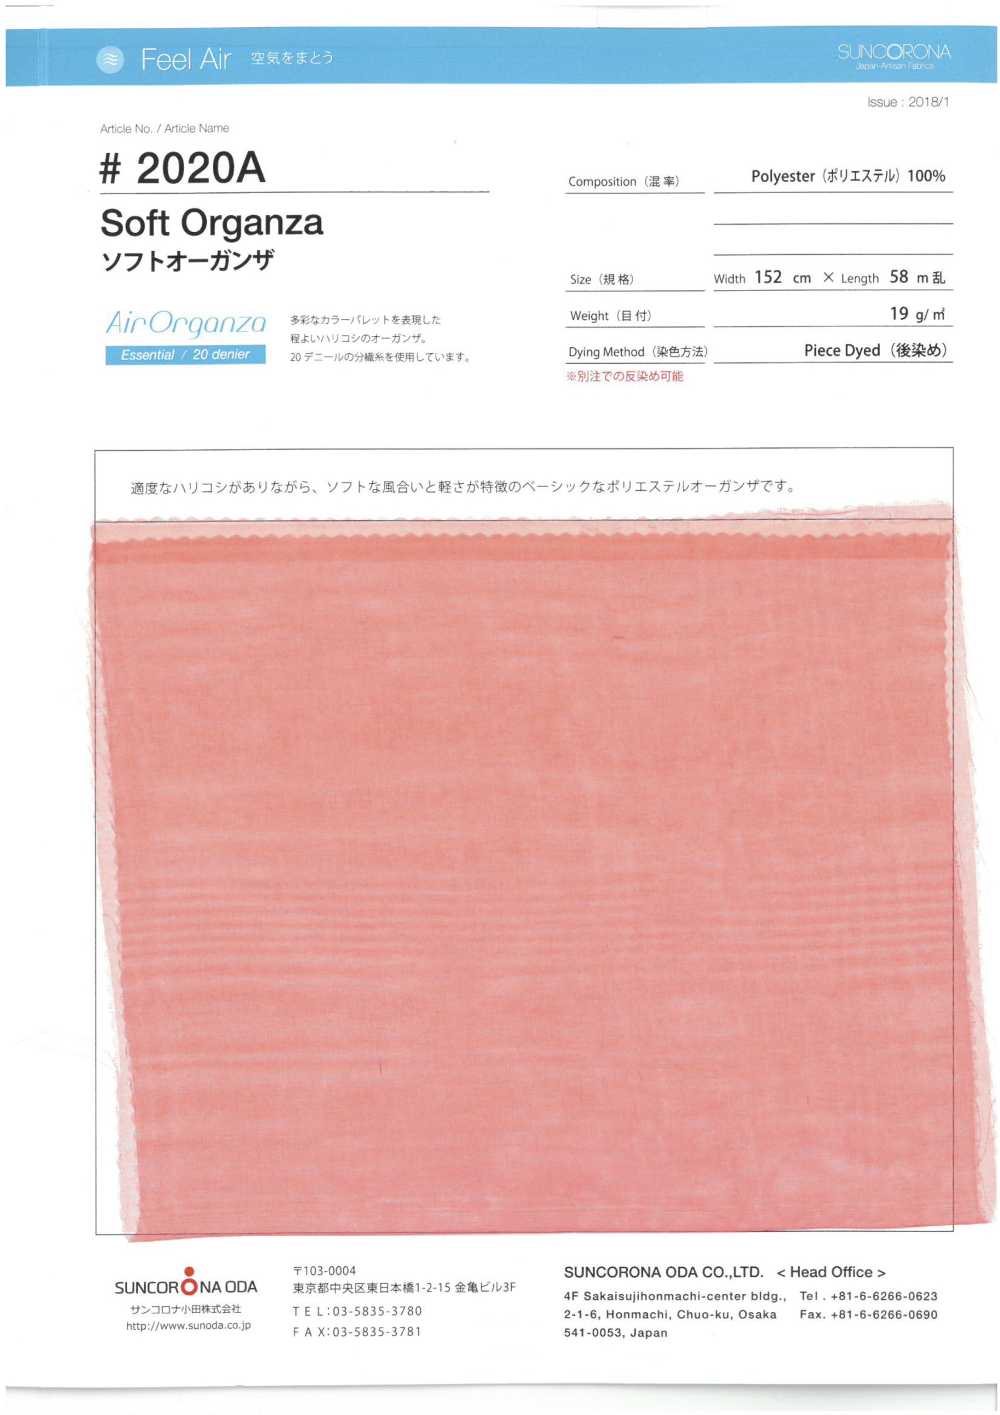 2020A Polyester-weicher Organdy[Textilgewebe] Suncorona Oda